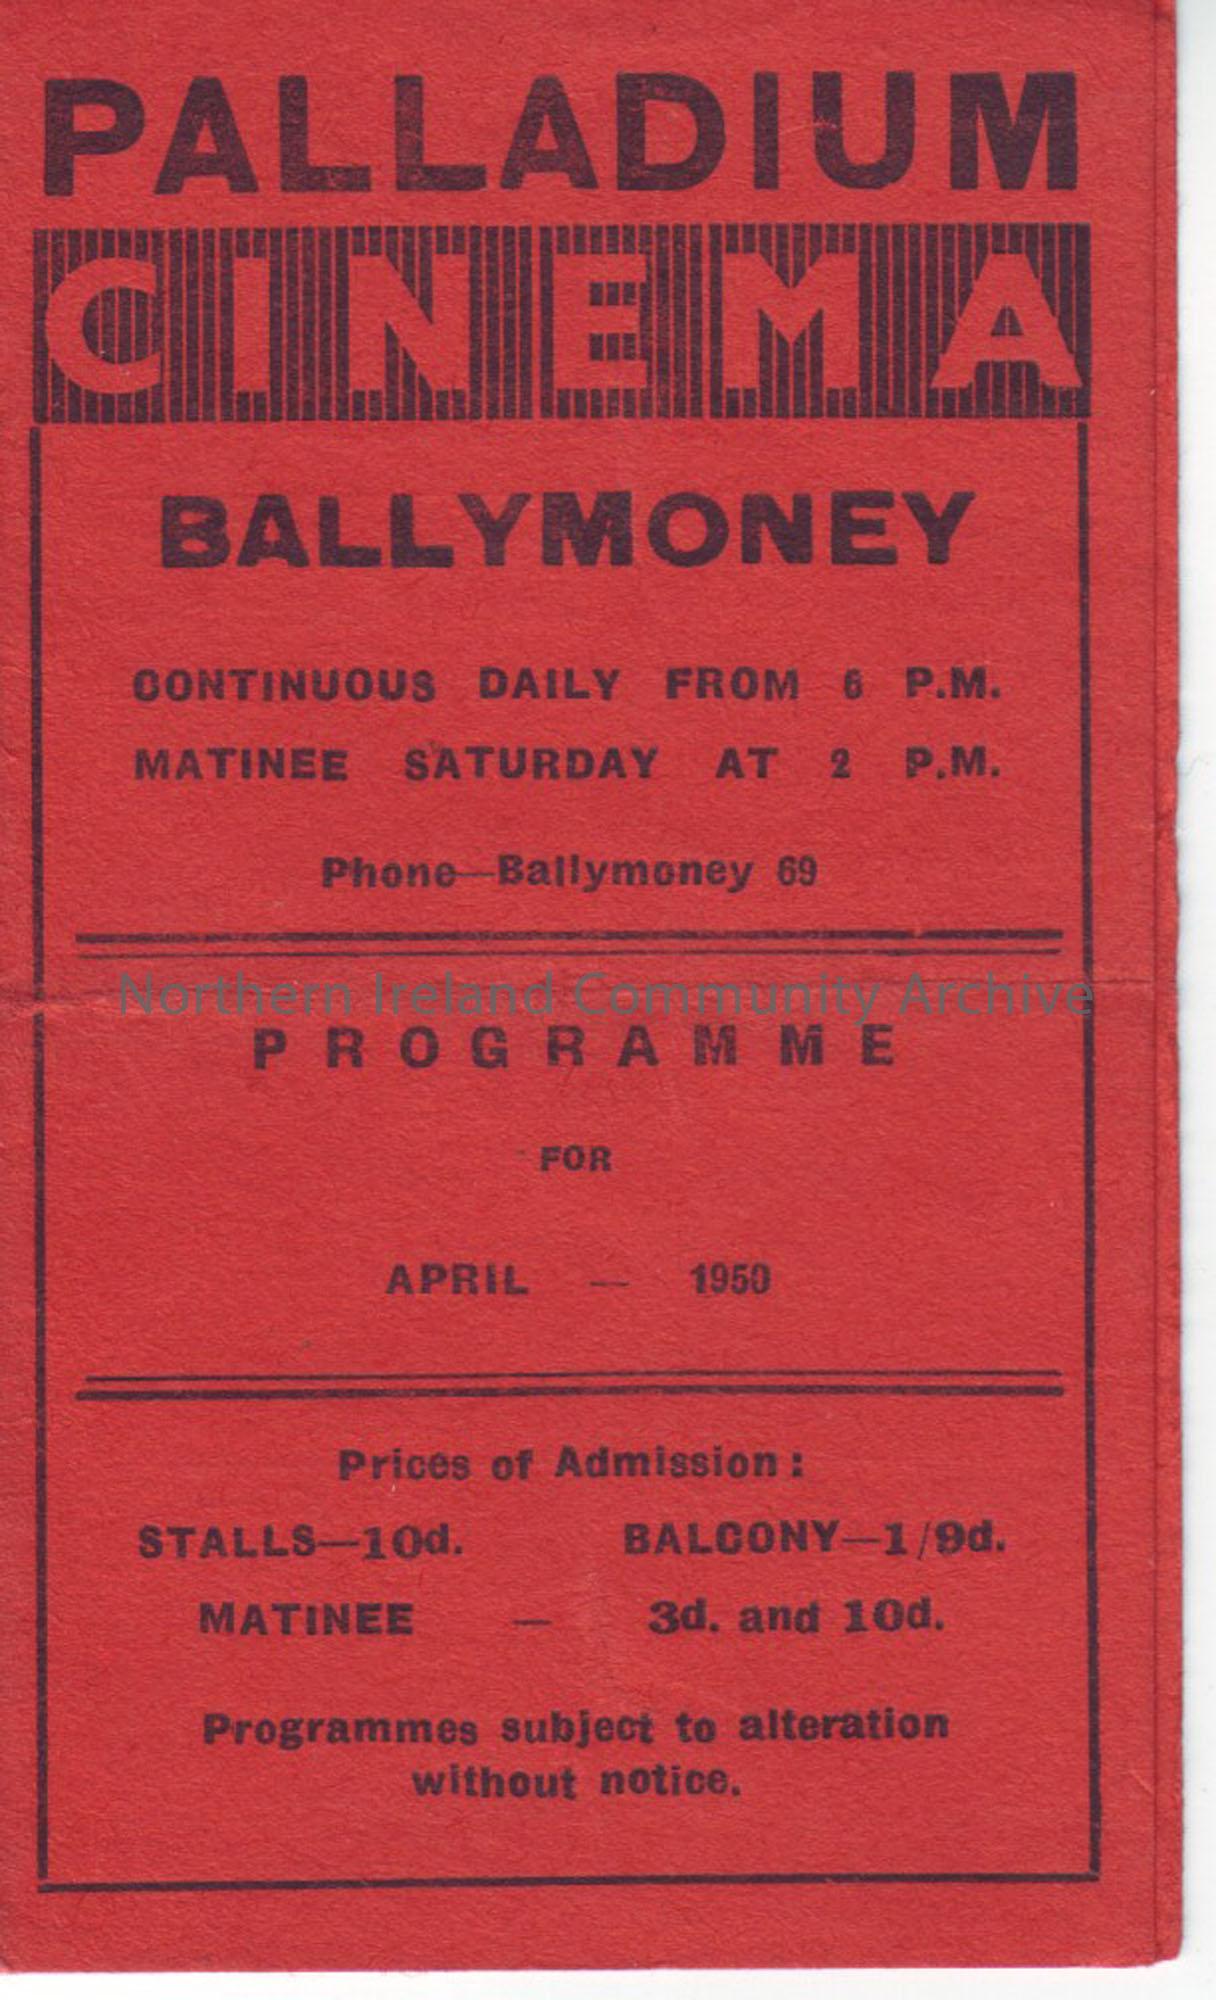 red monthly programme for Ballymoney Palladium cinema- April 1950